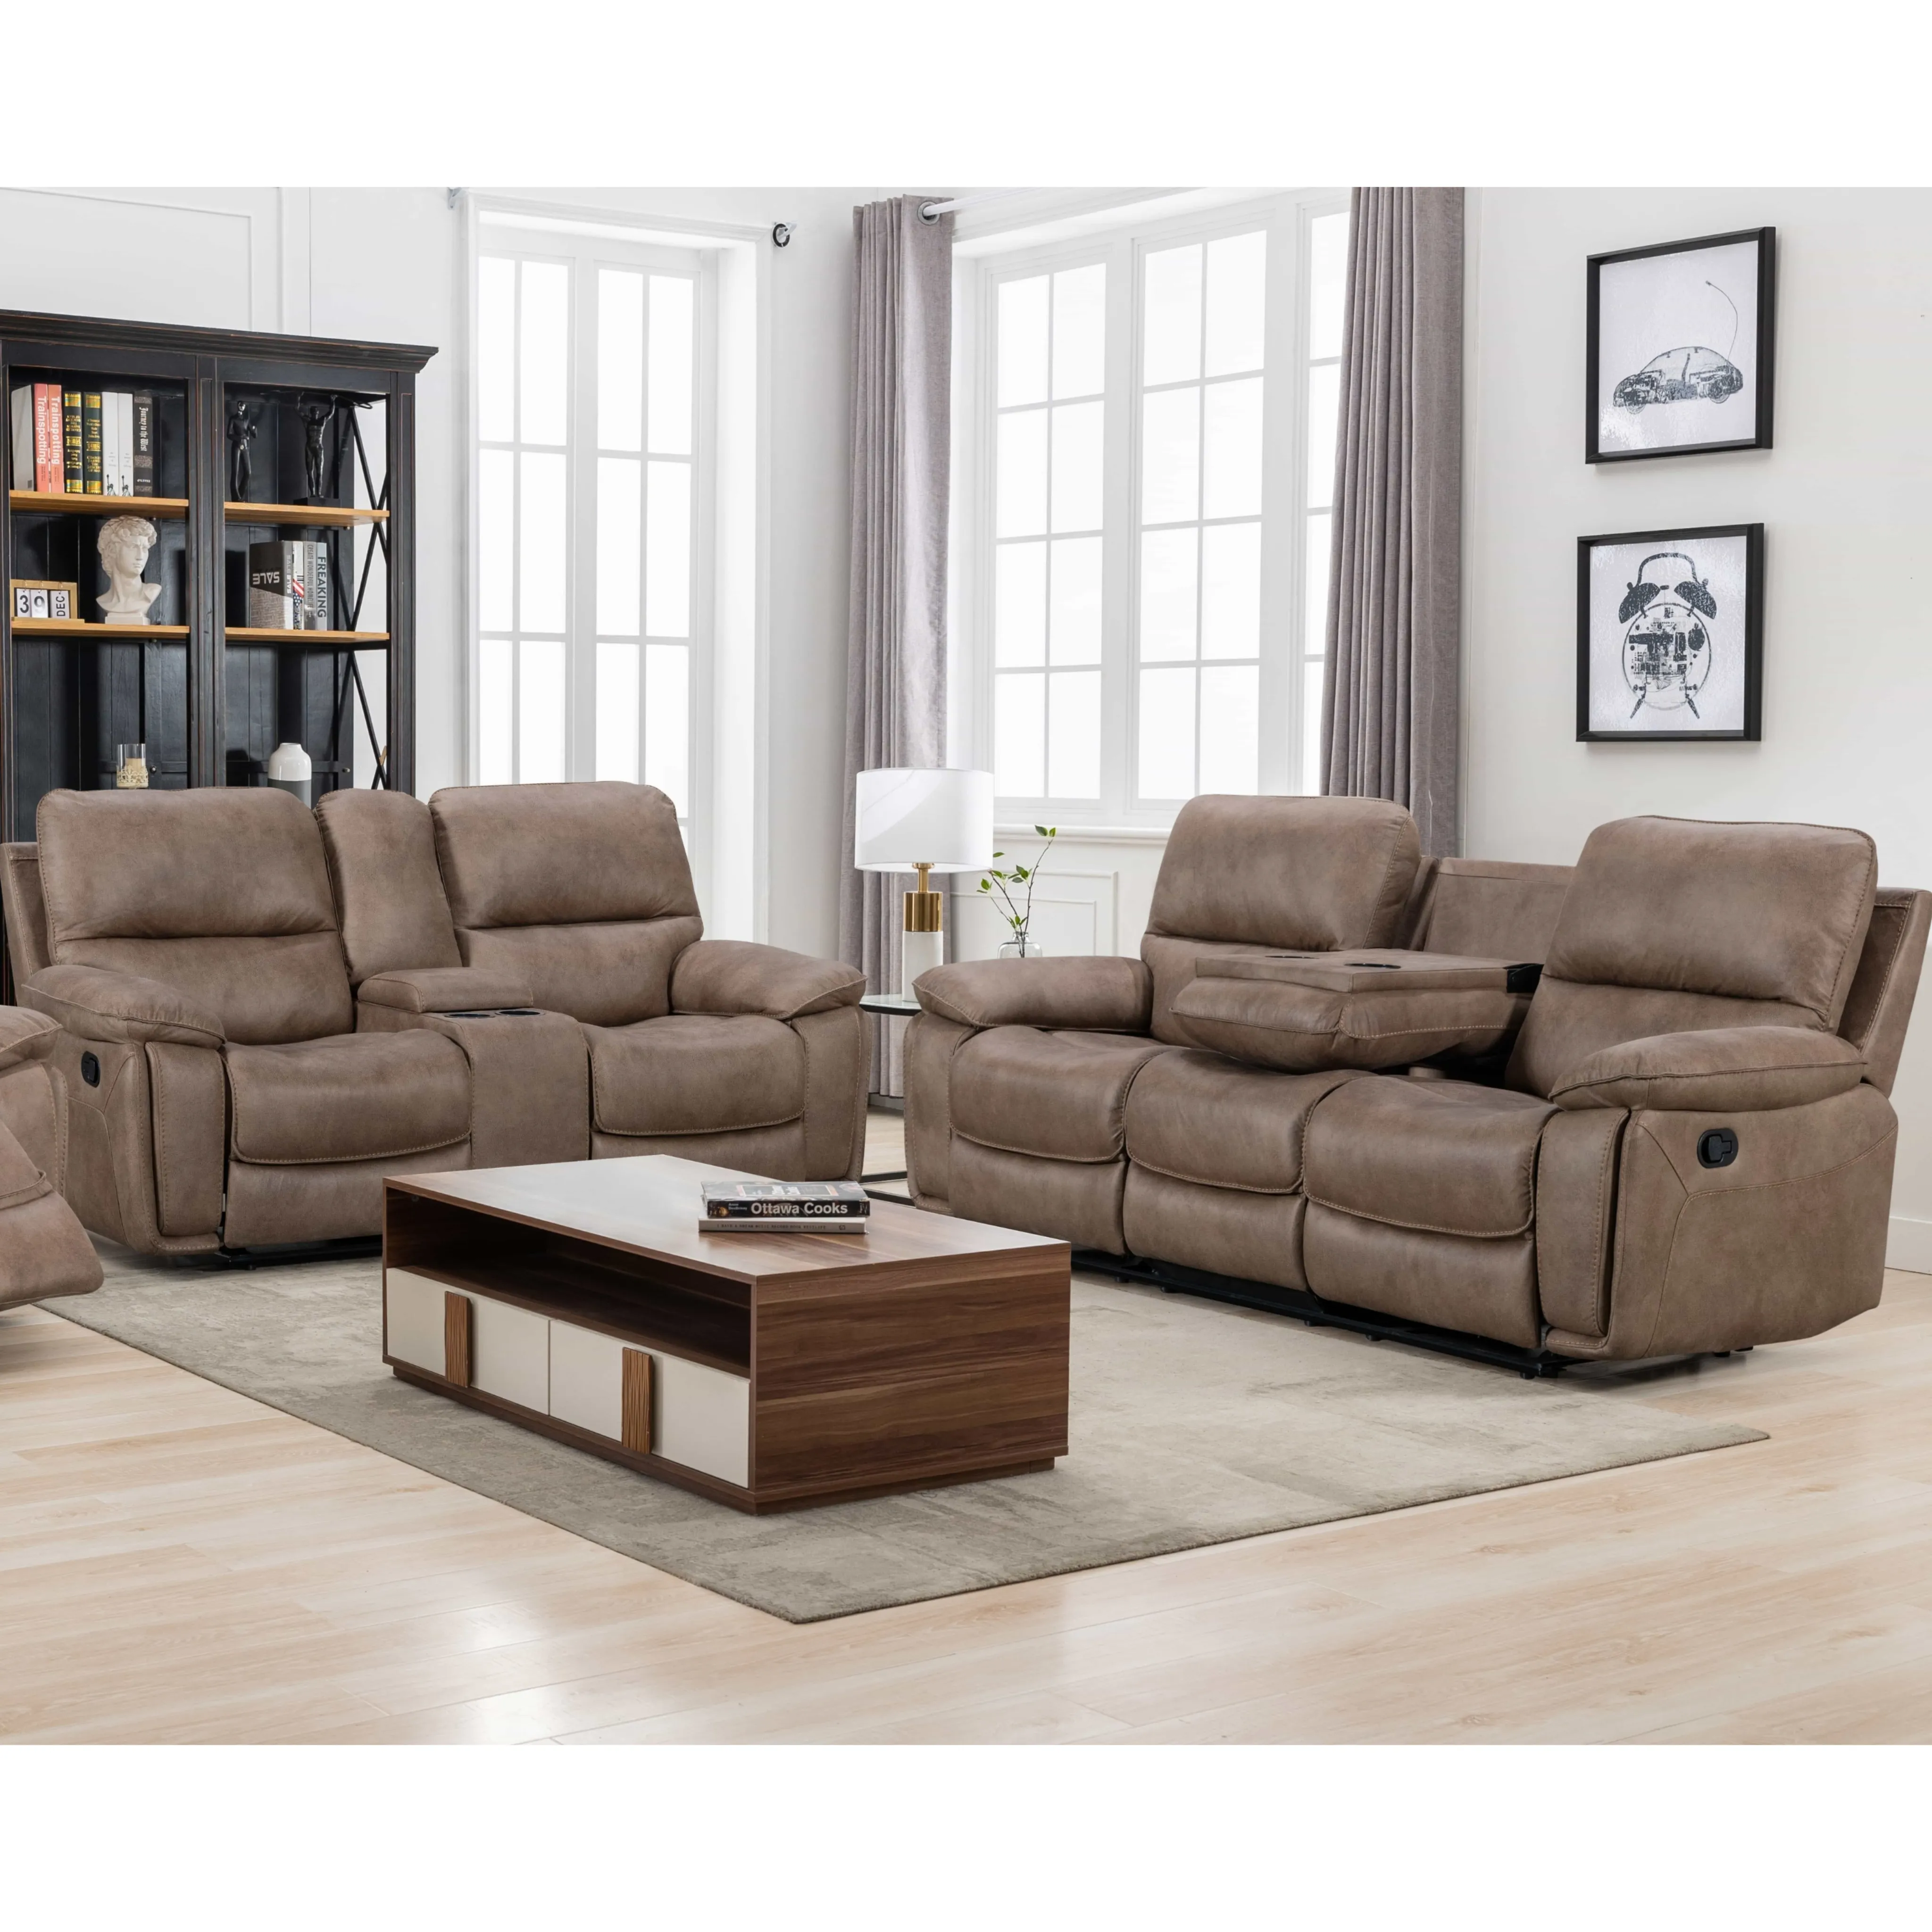 Microfiber Fabric Loveseat Recliner 2 Seat reclining Sofa Living Room Recliners Wholesale Retail